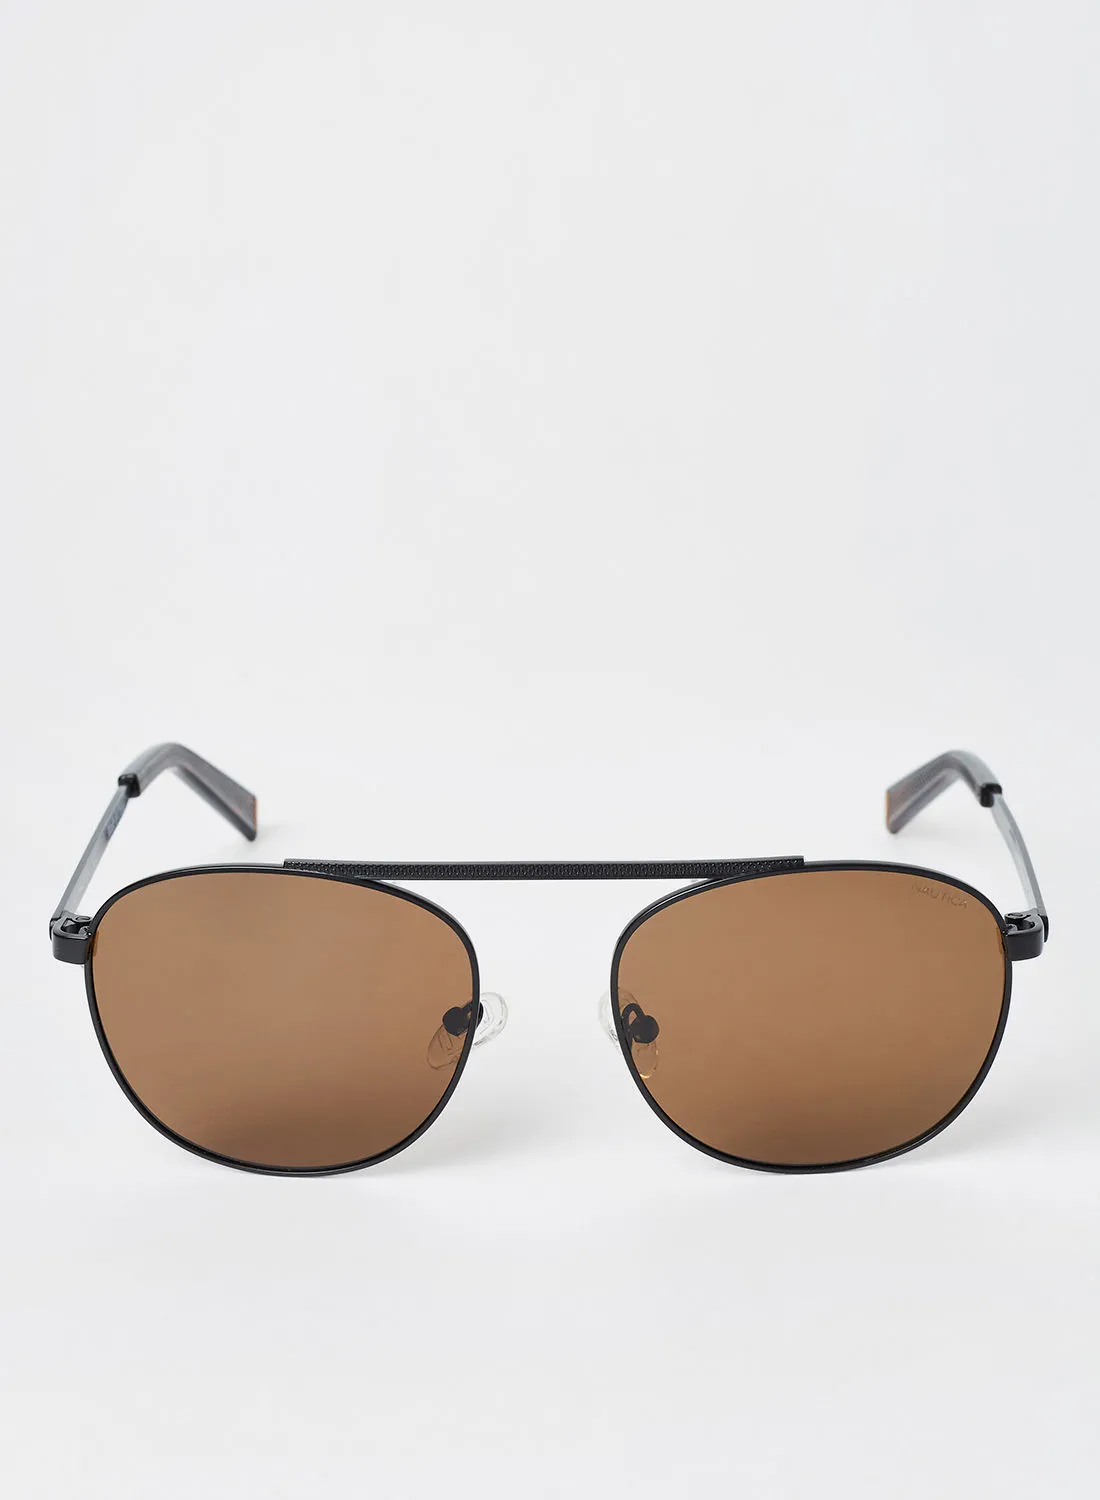 NAUTICA Men's Full Rim Injected Modified Rectangle Sunglasses - Lens Size: 54 mm